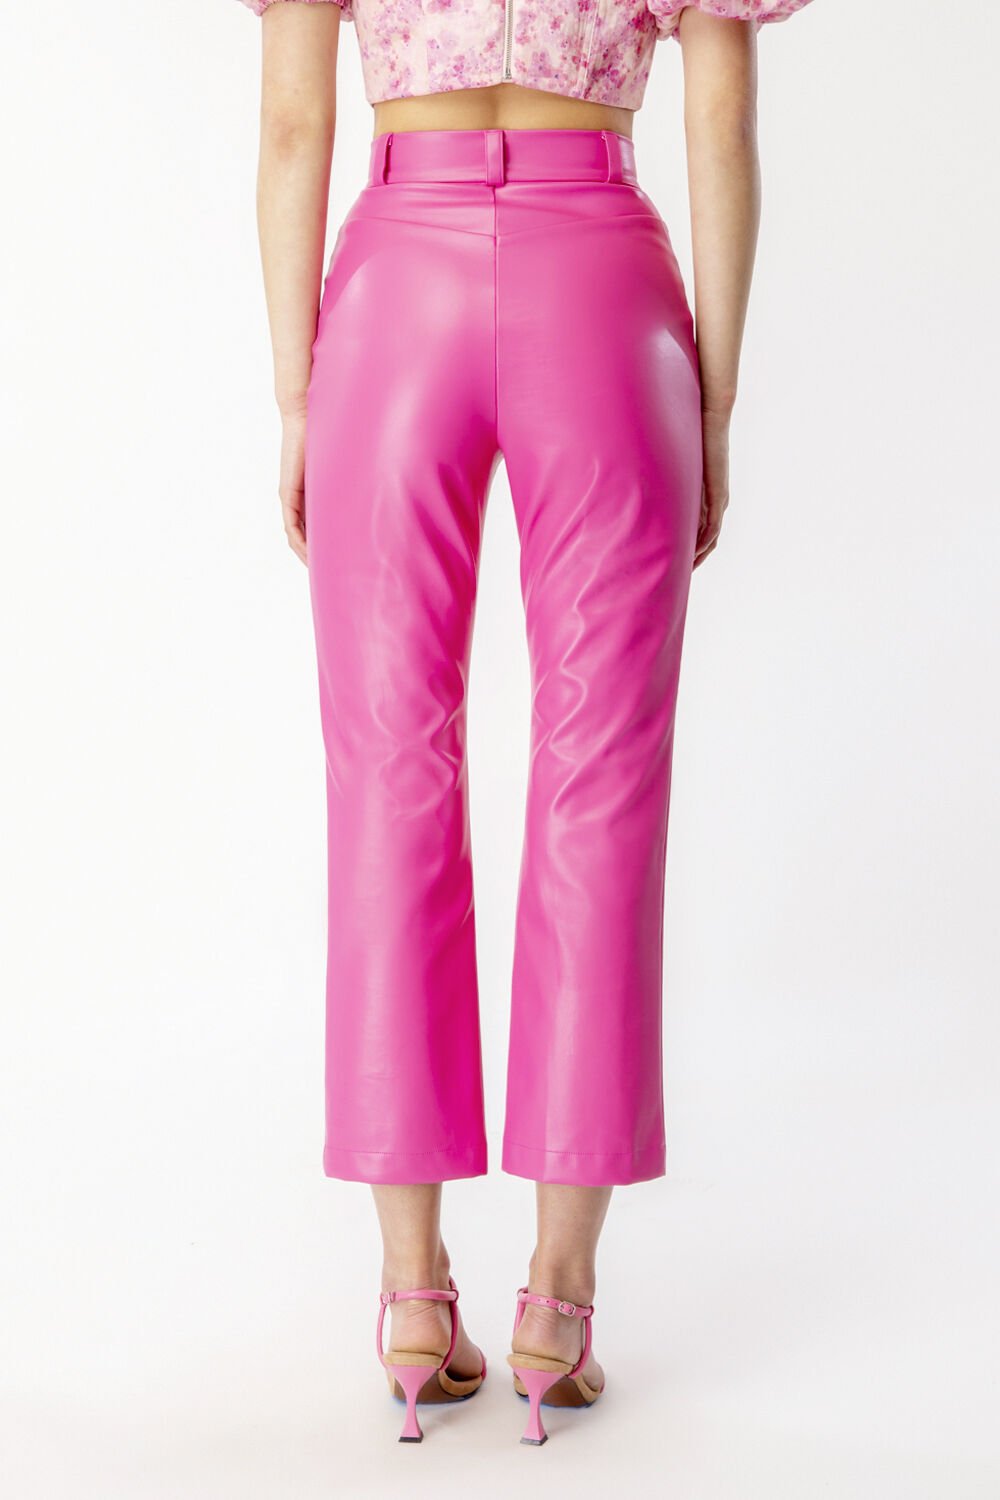 ASOS DESIGN leather look kick flare trouser in pop pink  ASOS